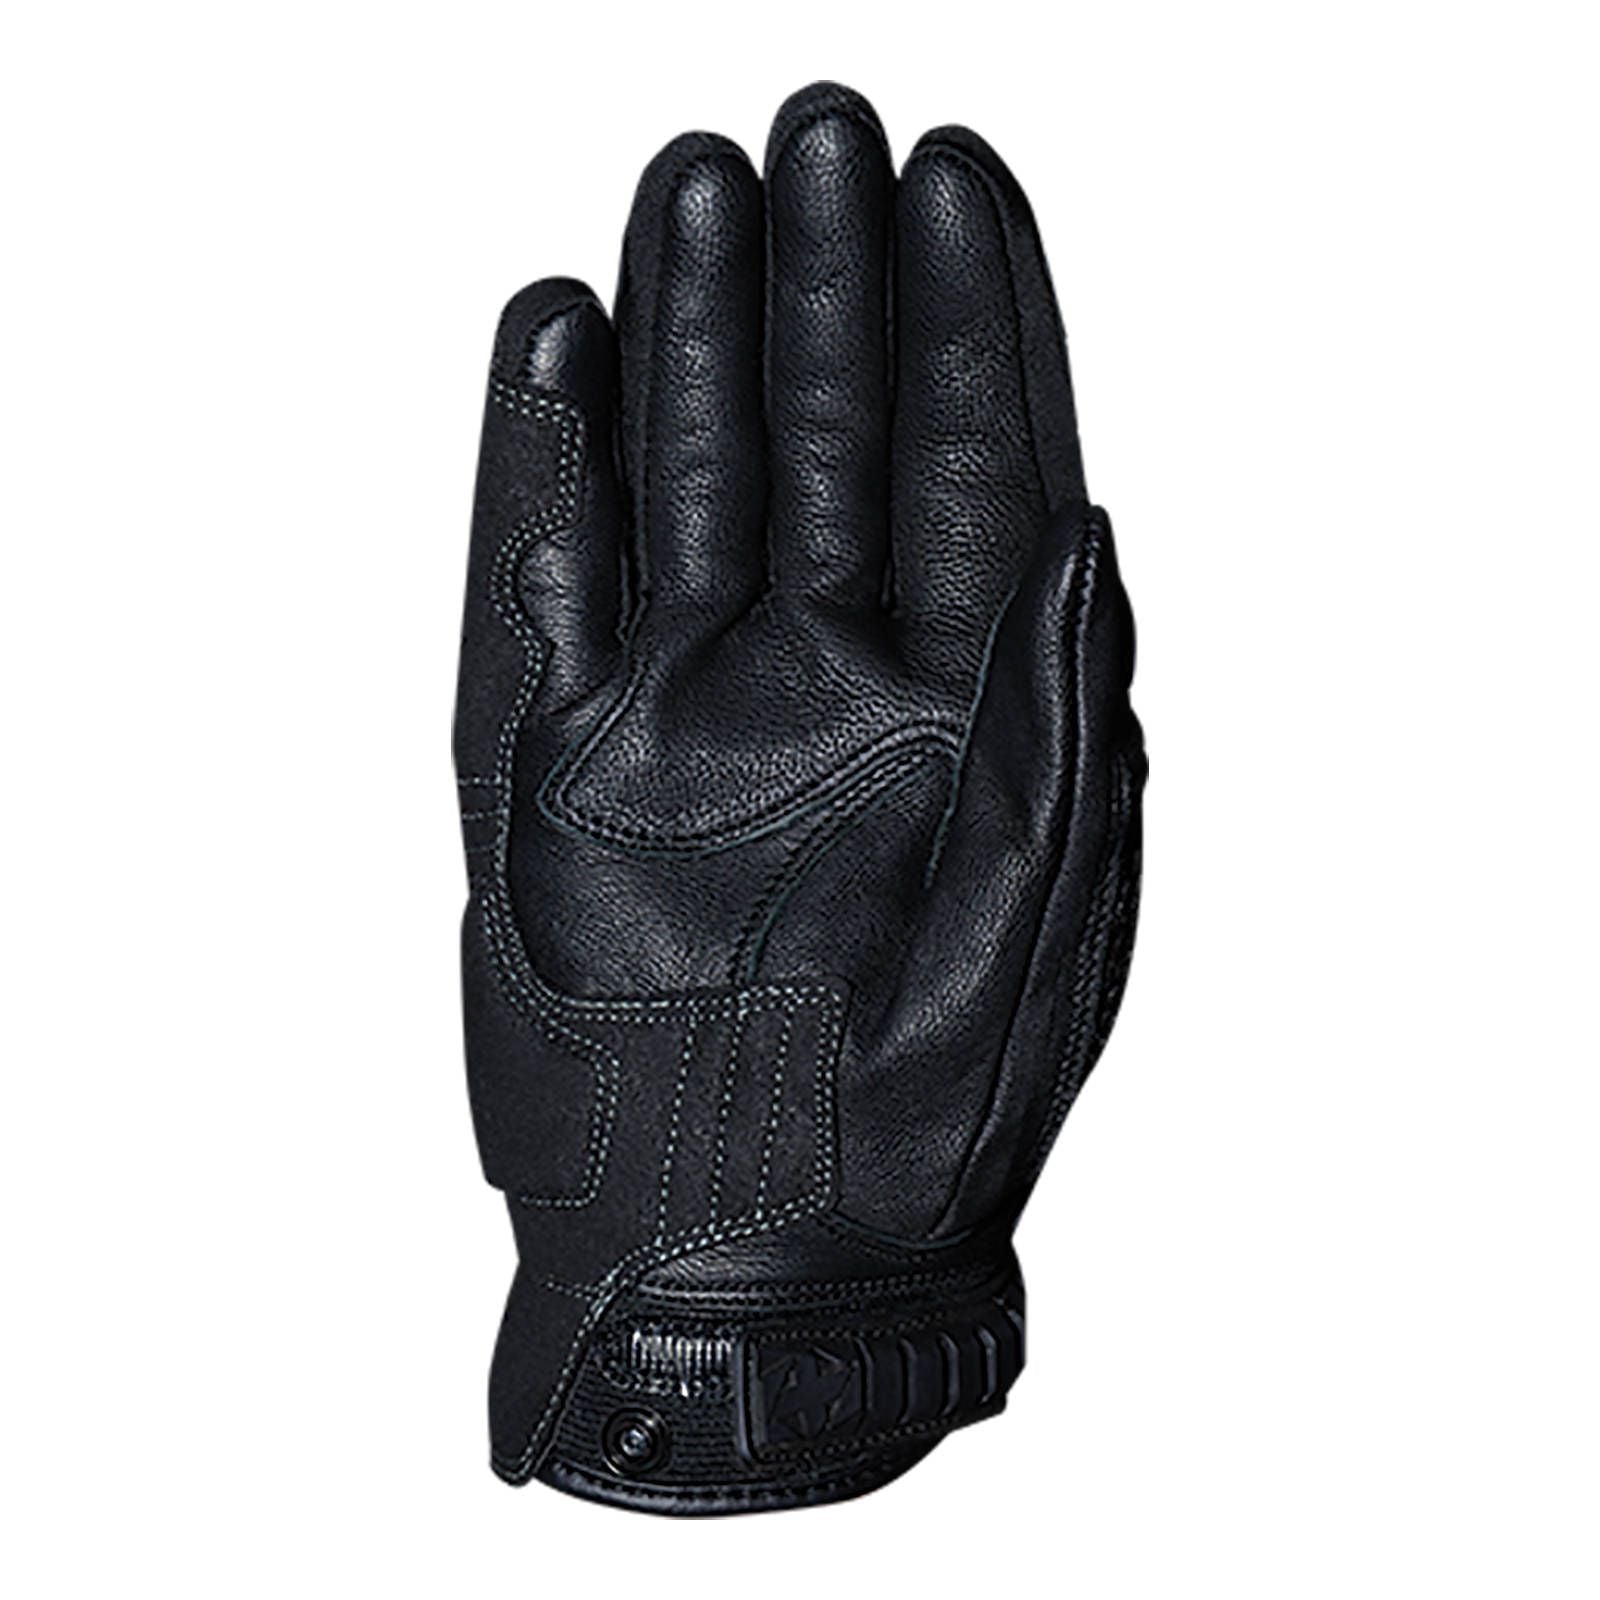 New OXFORD RP-4 Short Leather Sport Glove - Black (3XL) #OXGM1731013XL